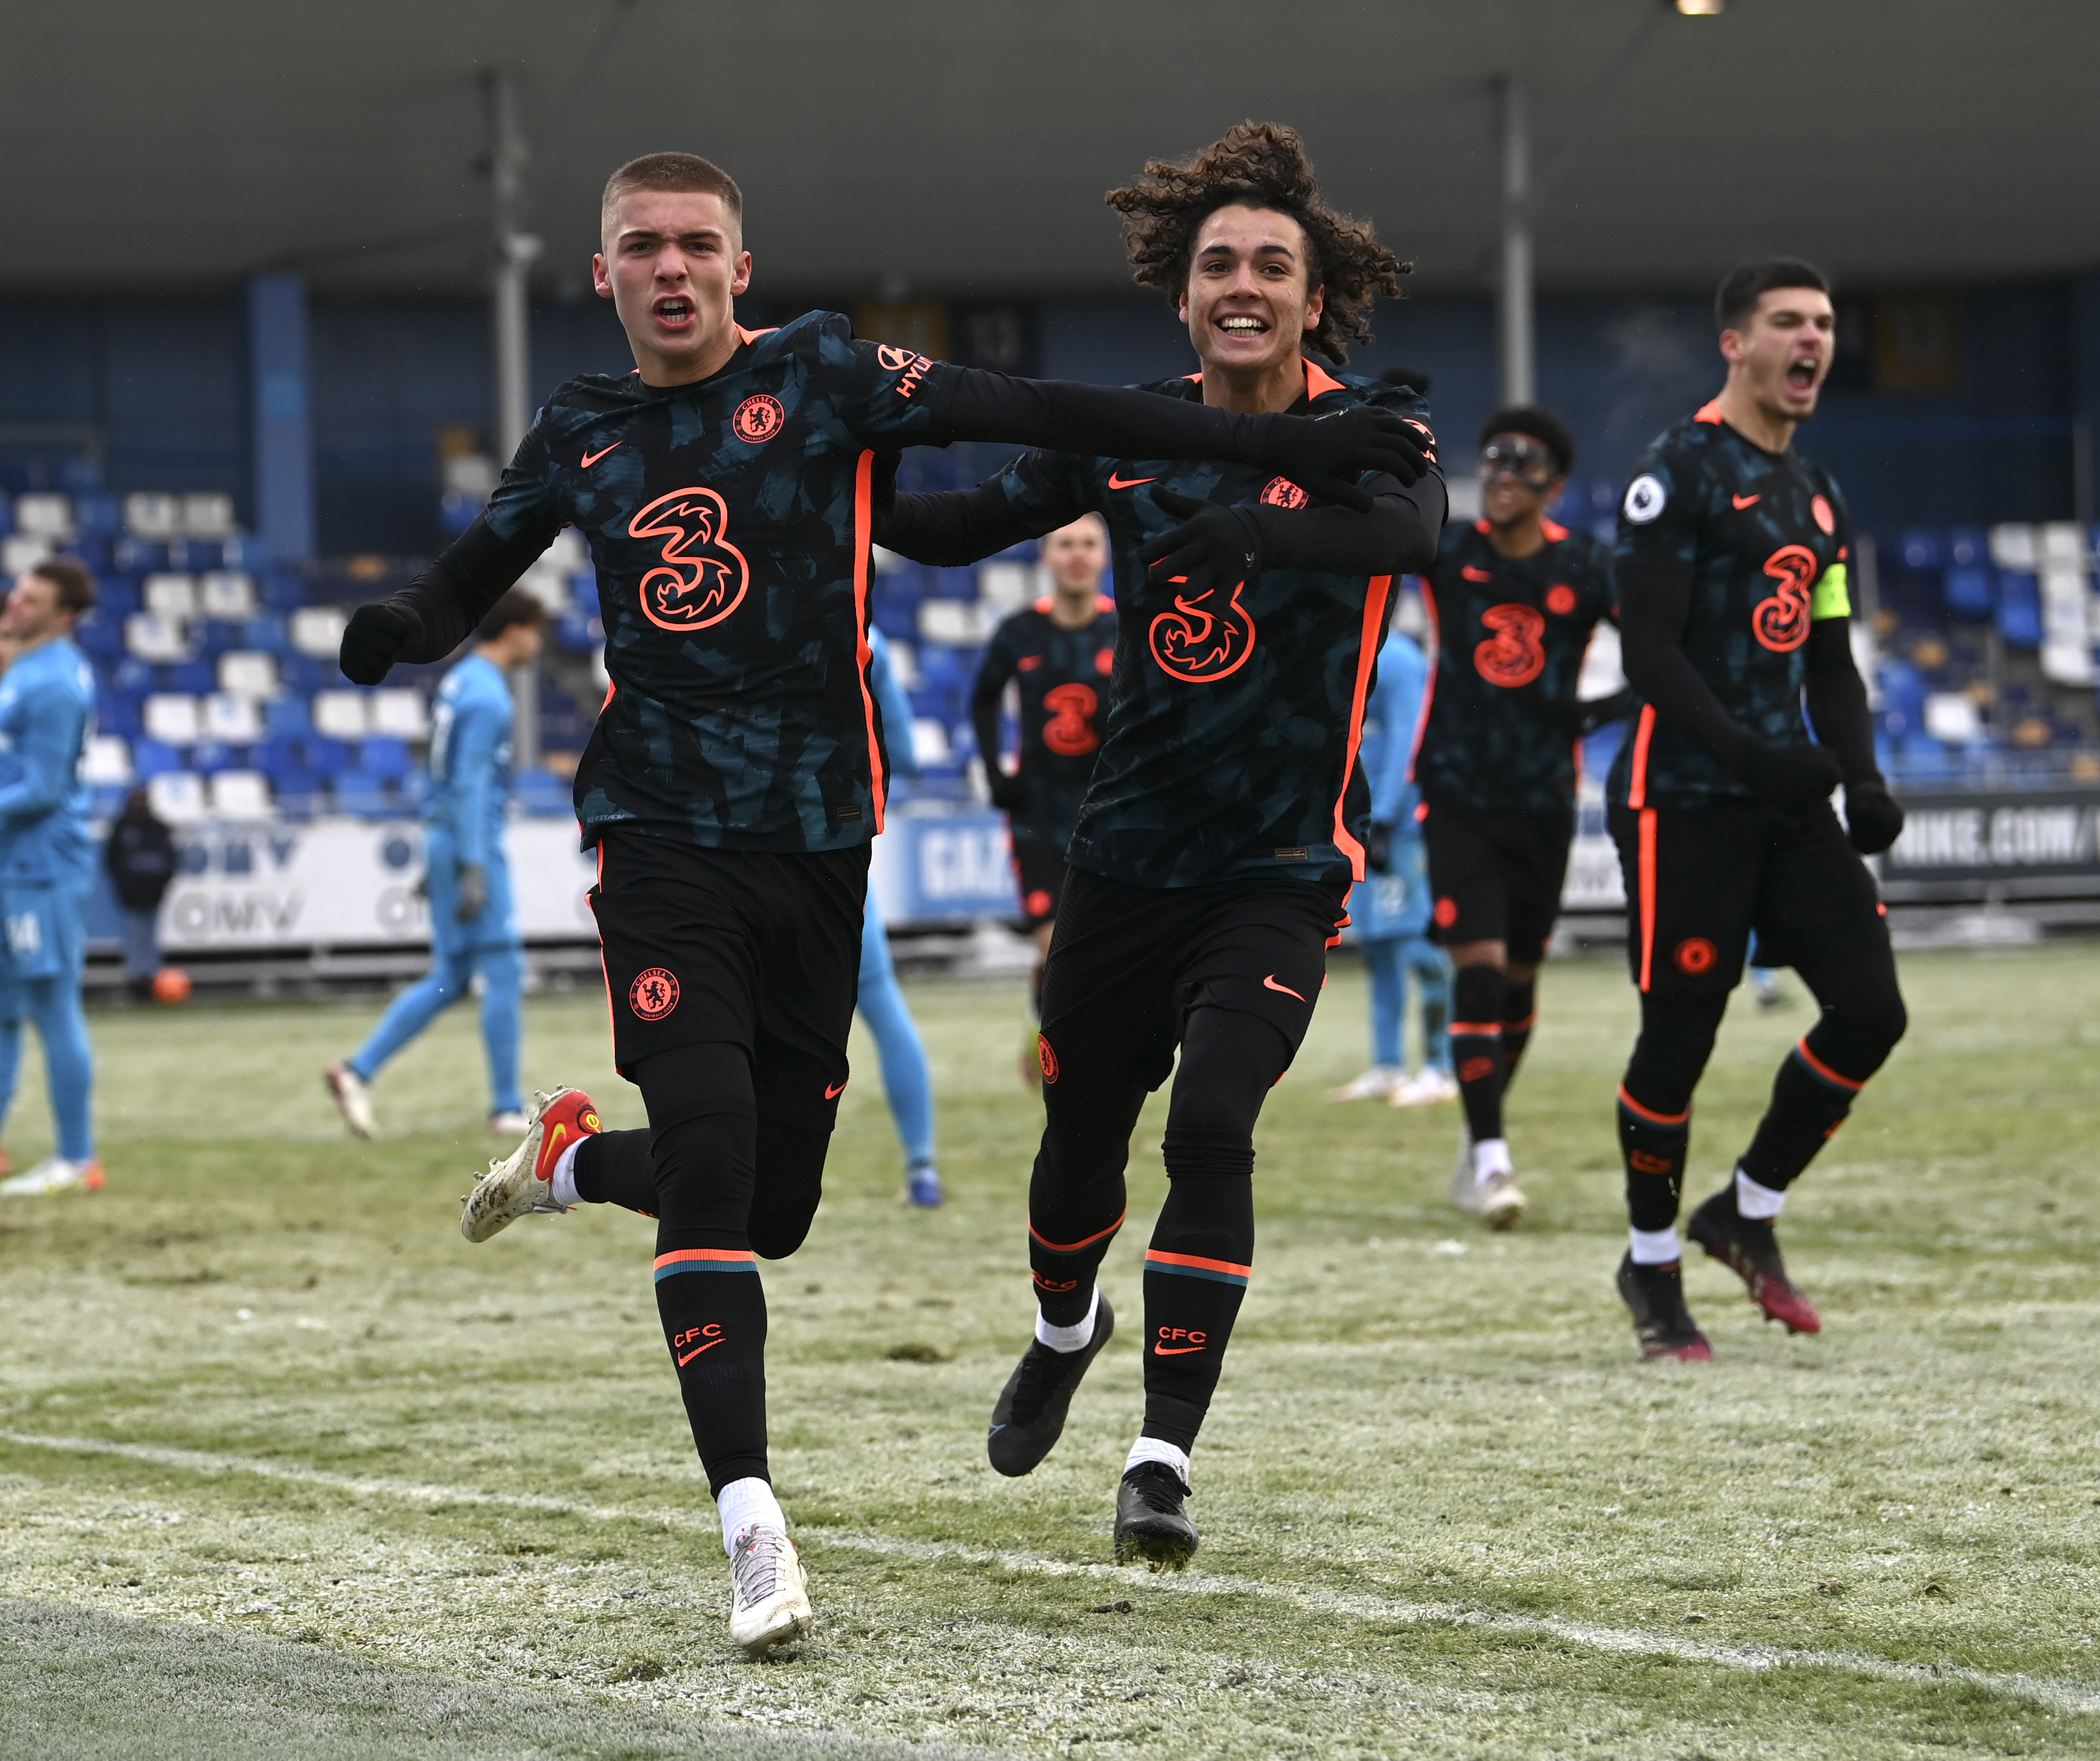 Zenit St. Petersburg v Chelsea FC: Group H - UEFA Youth League